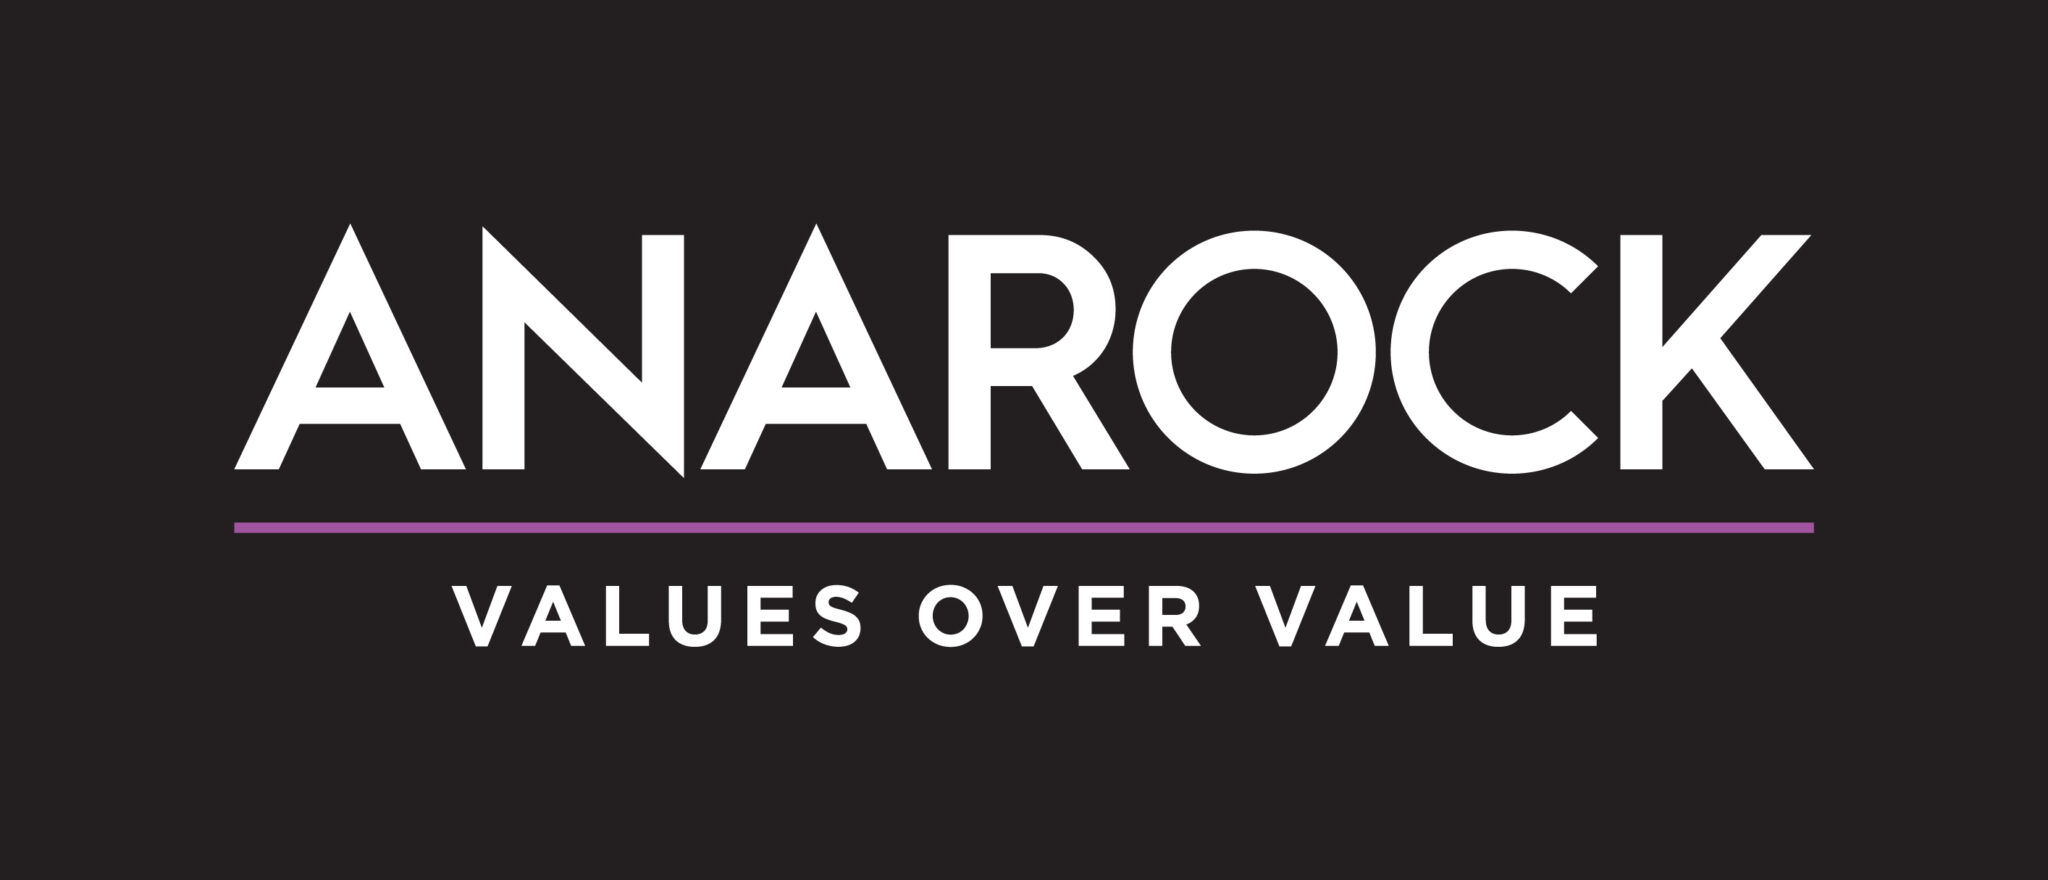 Anarock Logo new black